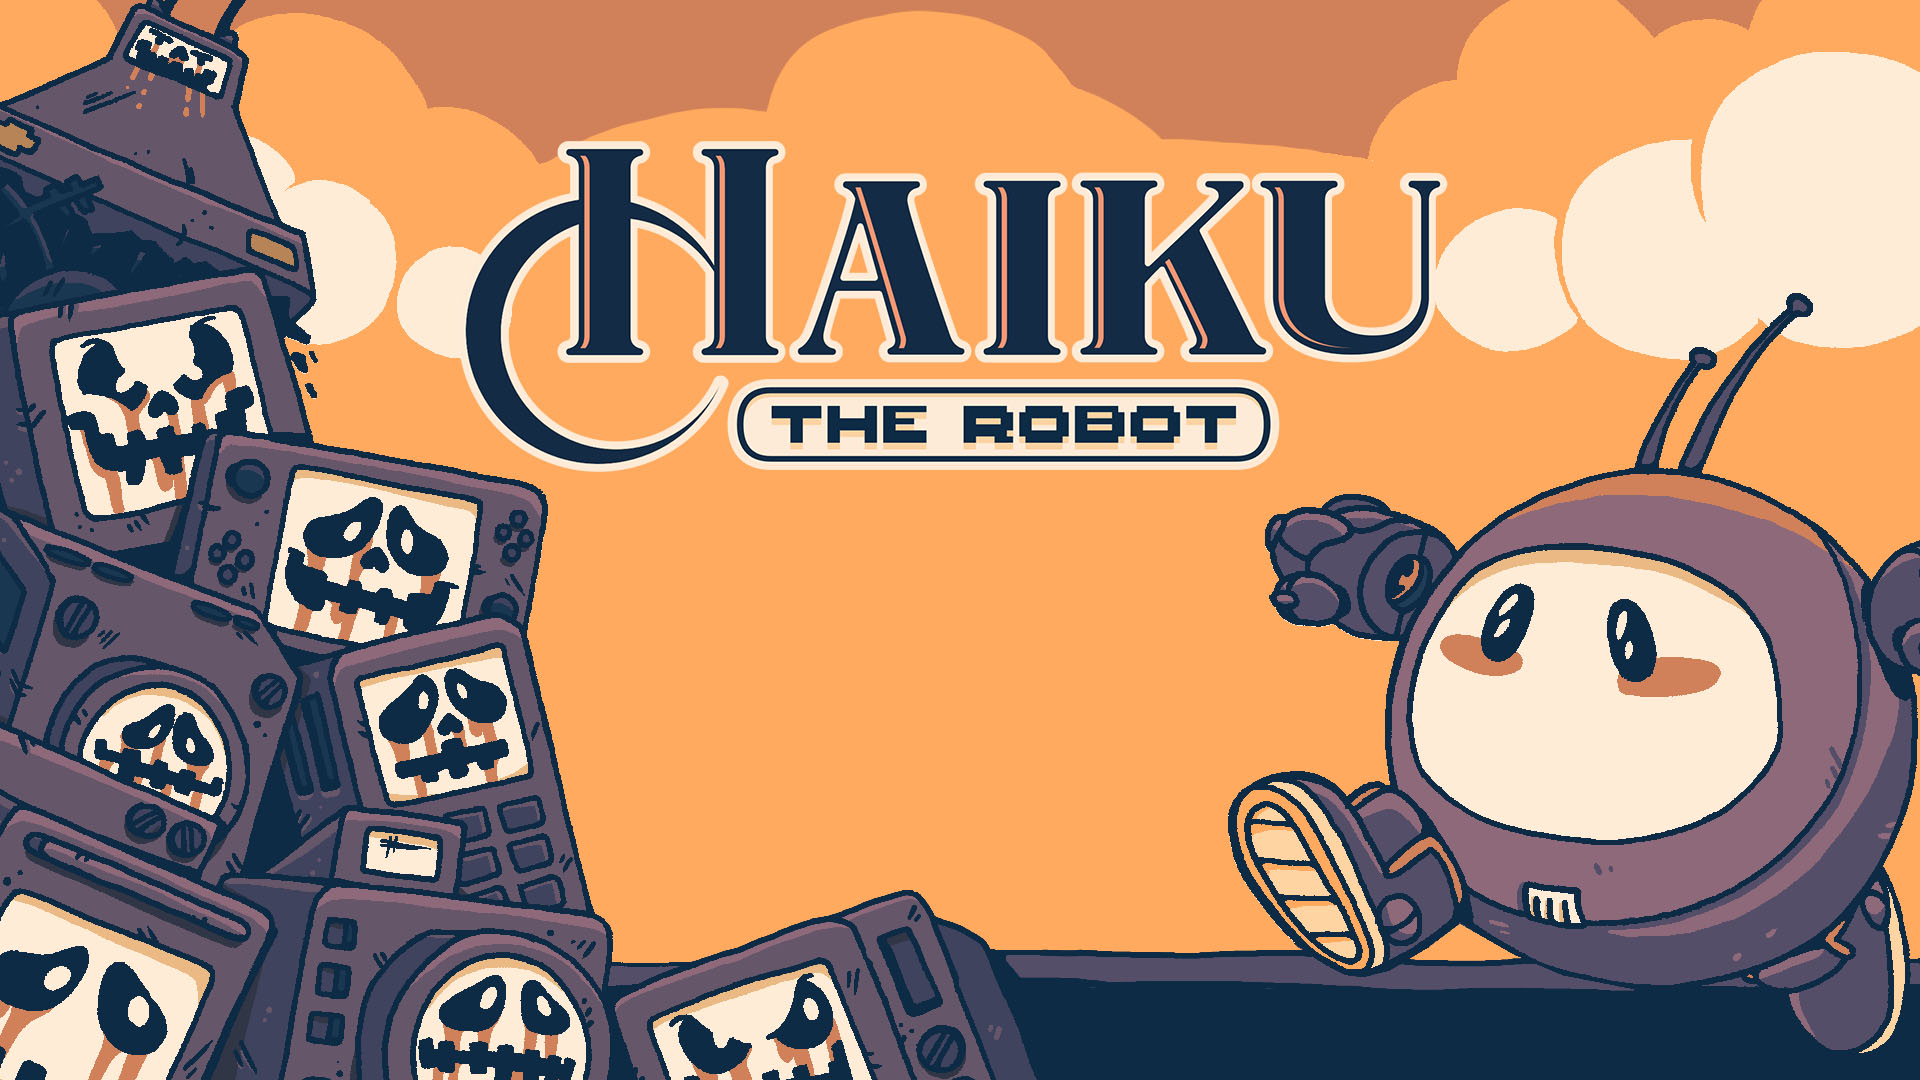 Video Game Haiku, the Robot HD Wallpaper